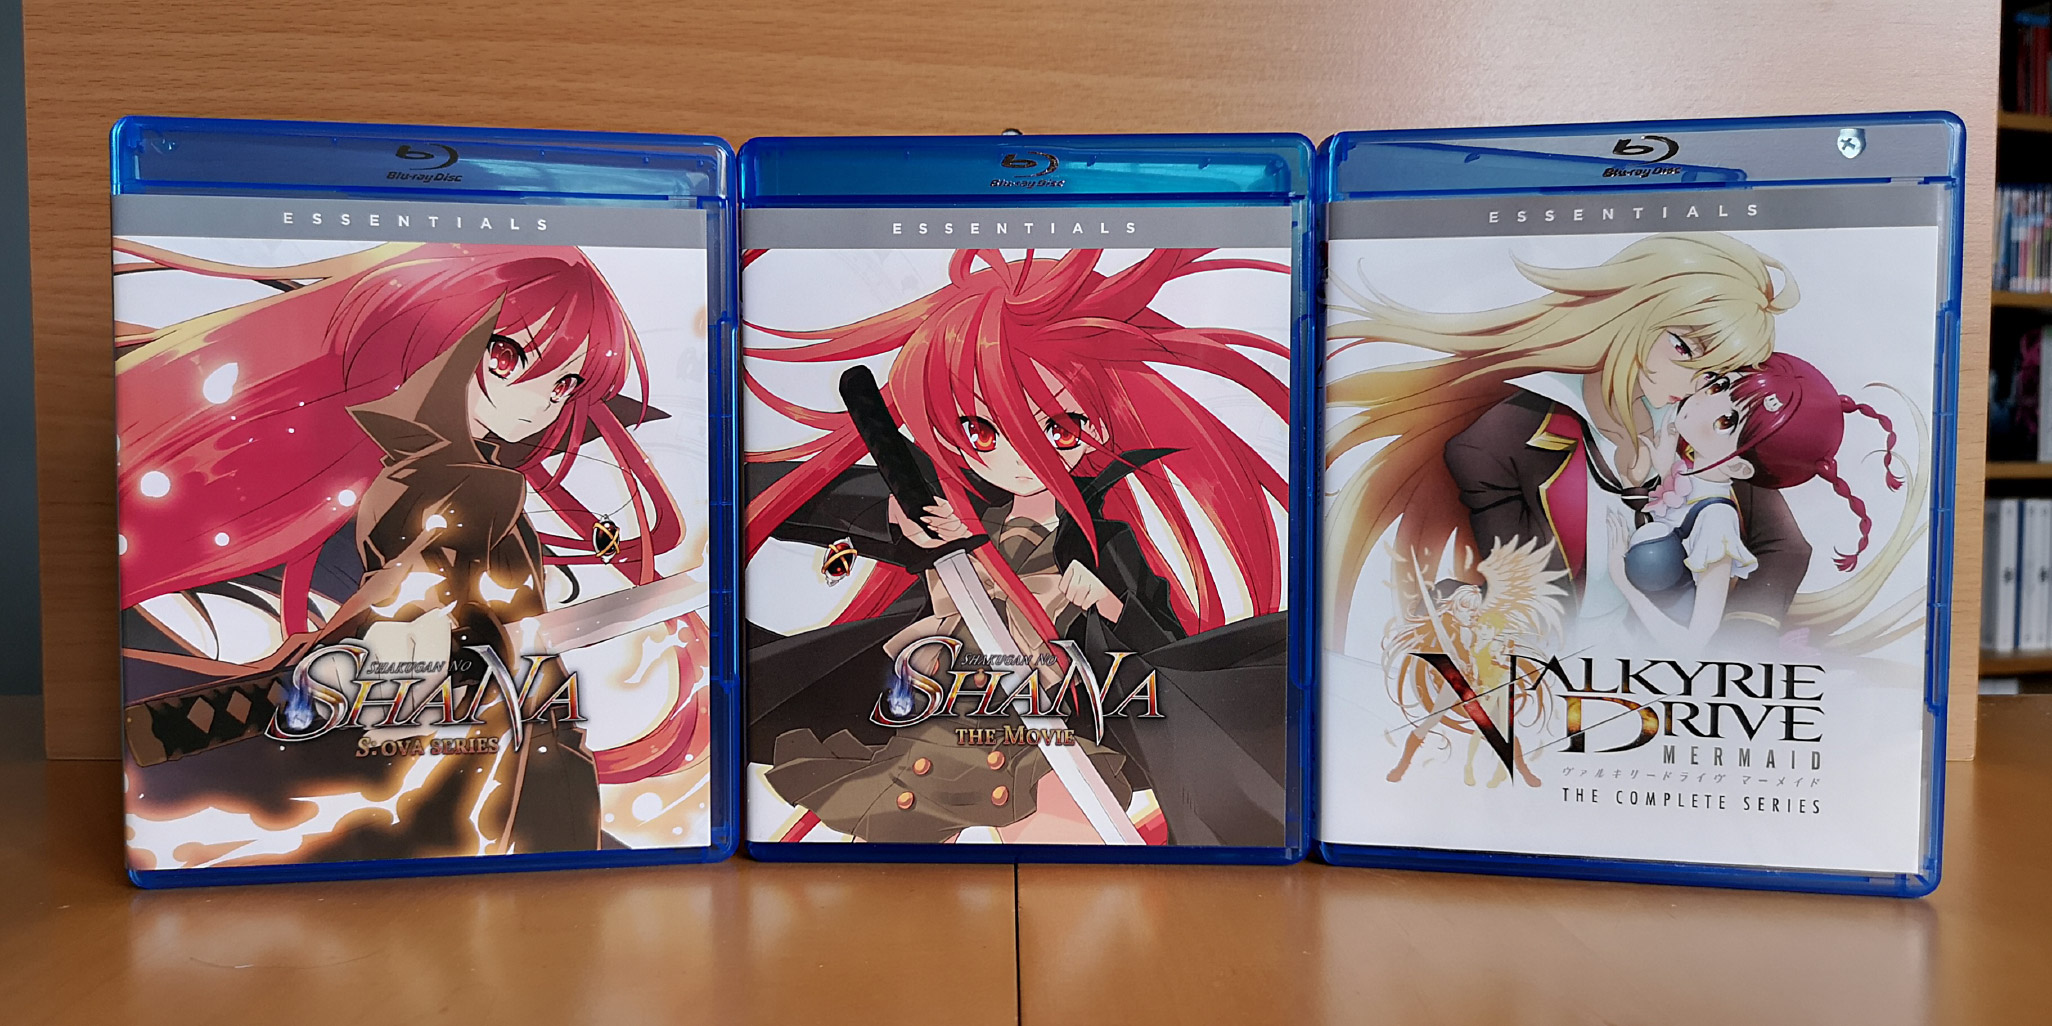 MASHLE Vol.1 Full Production Limited Edition Blu-ray Aniplex Anime Japan NEW